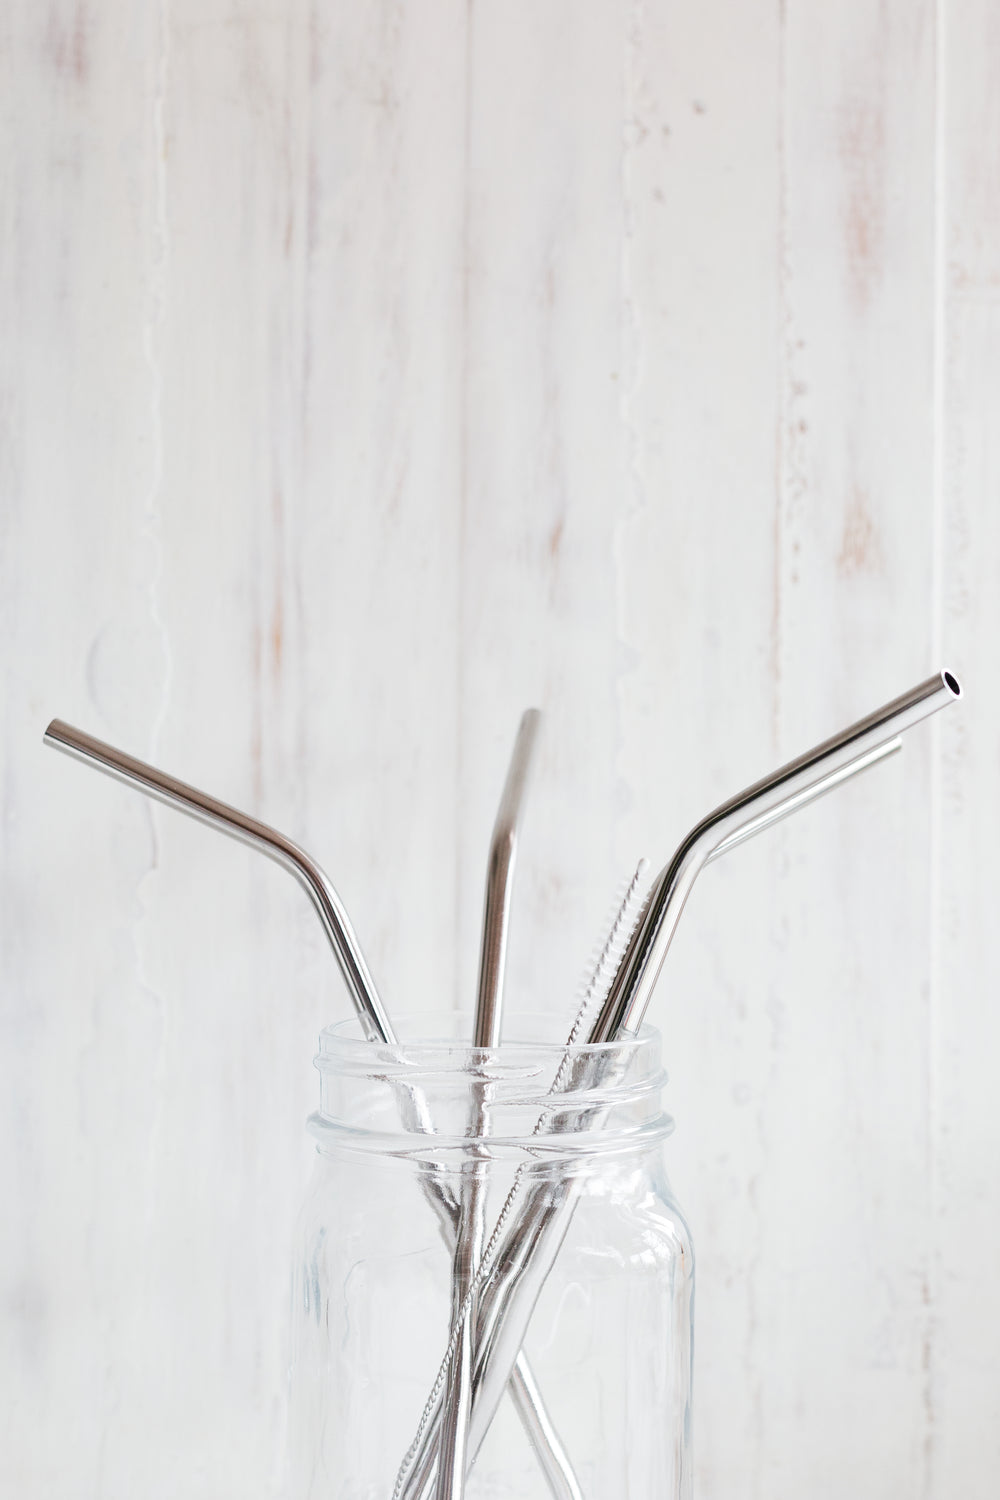 metal straws in jar